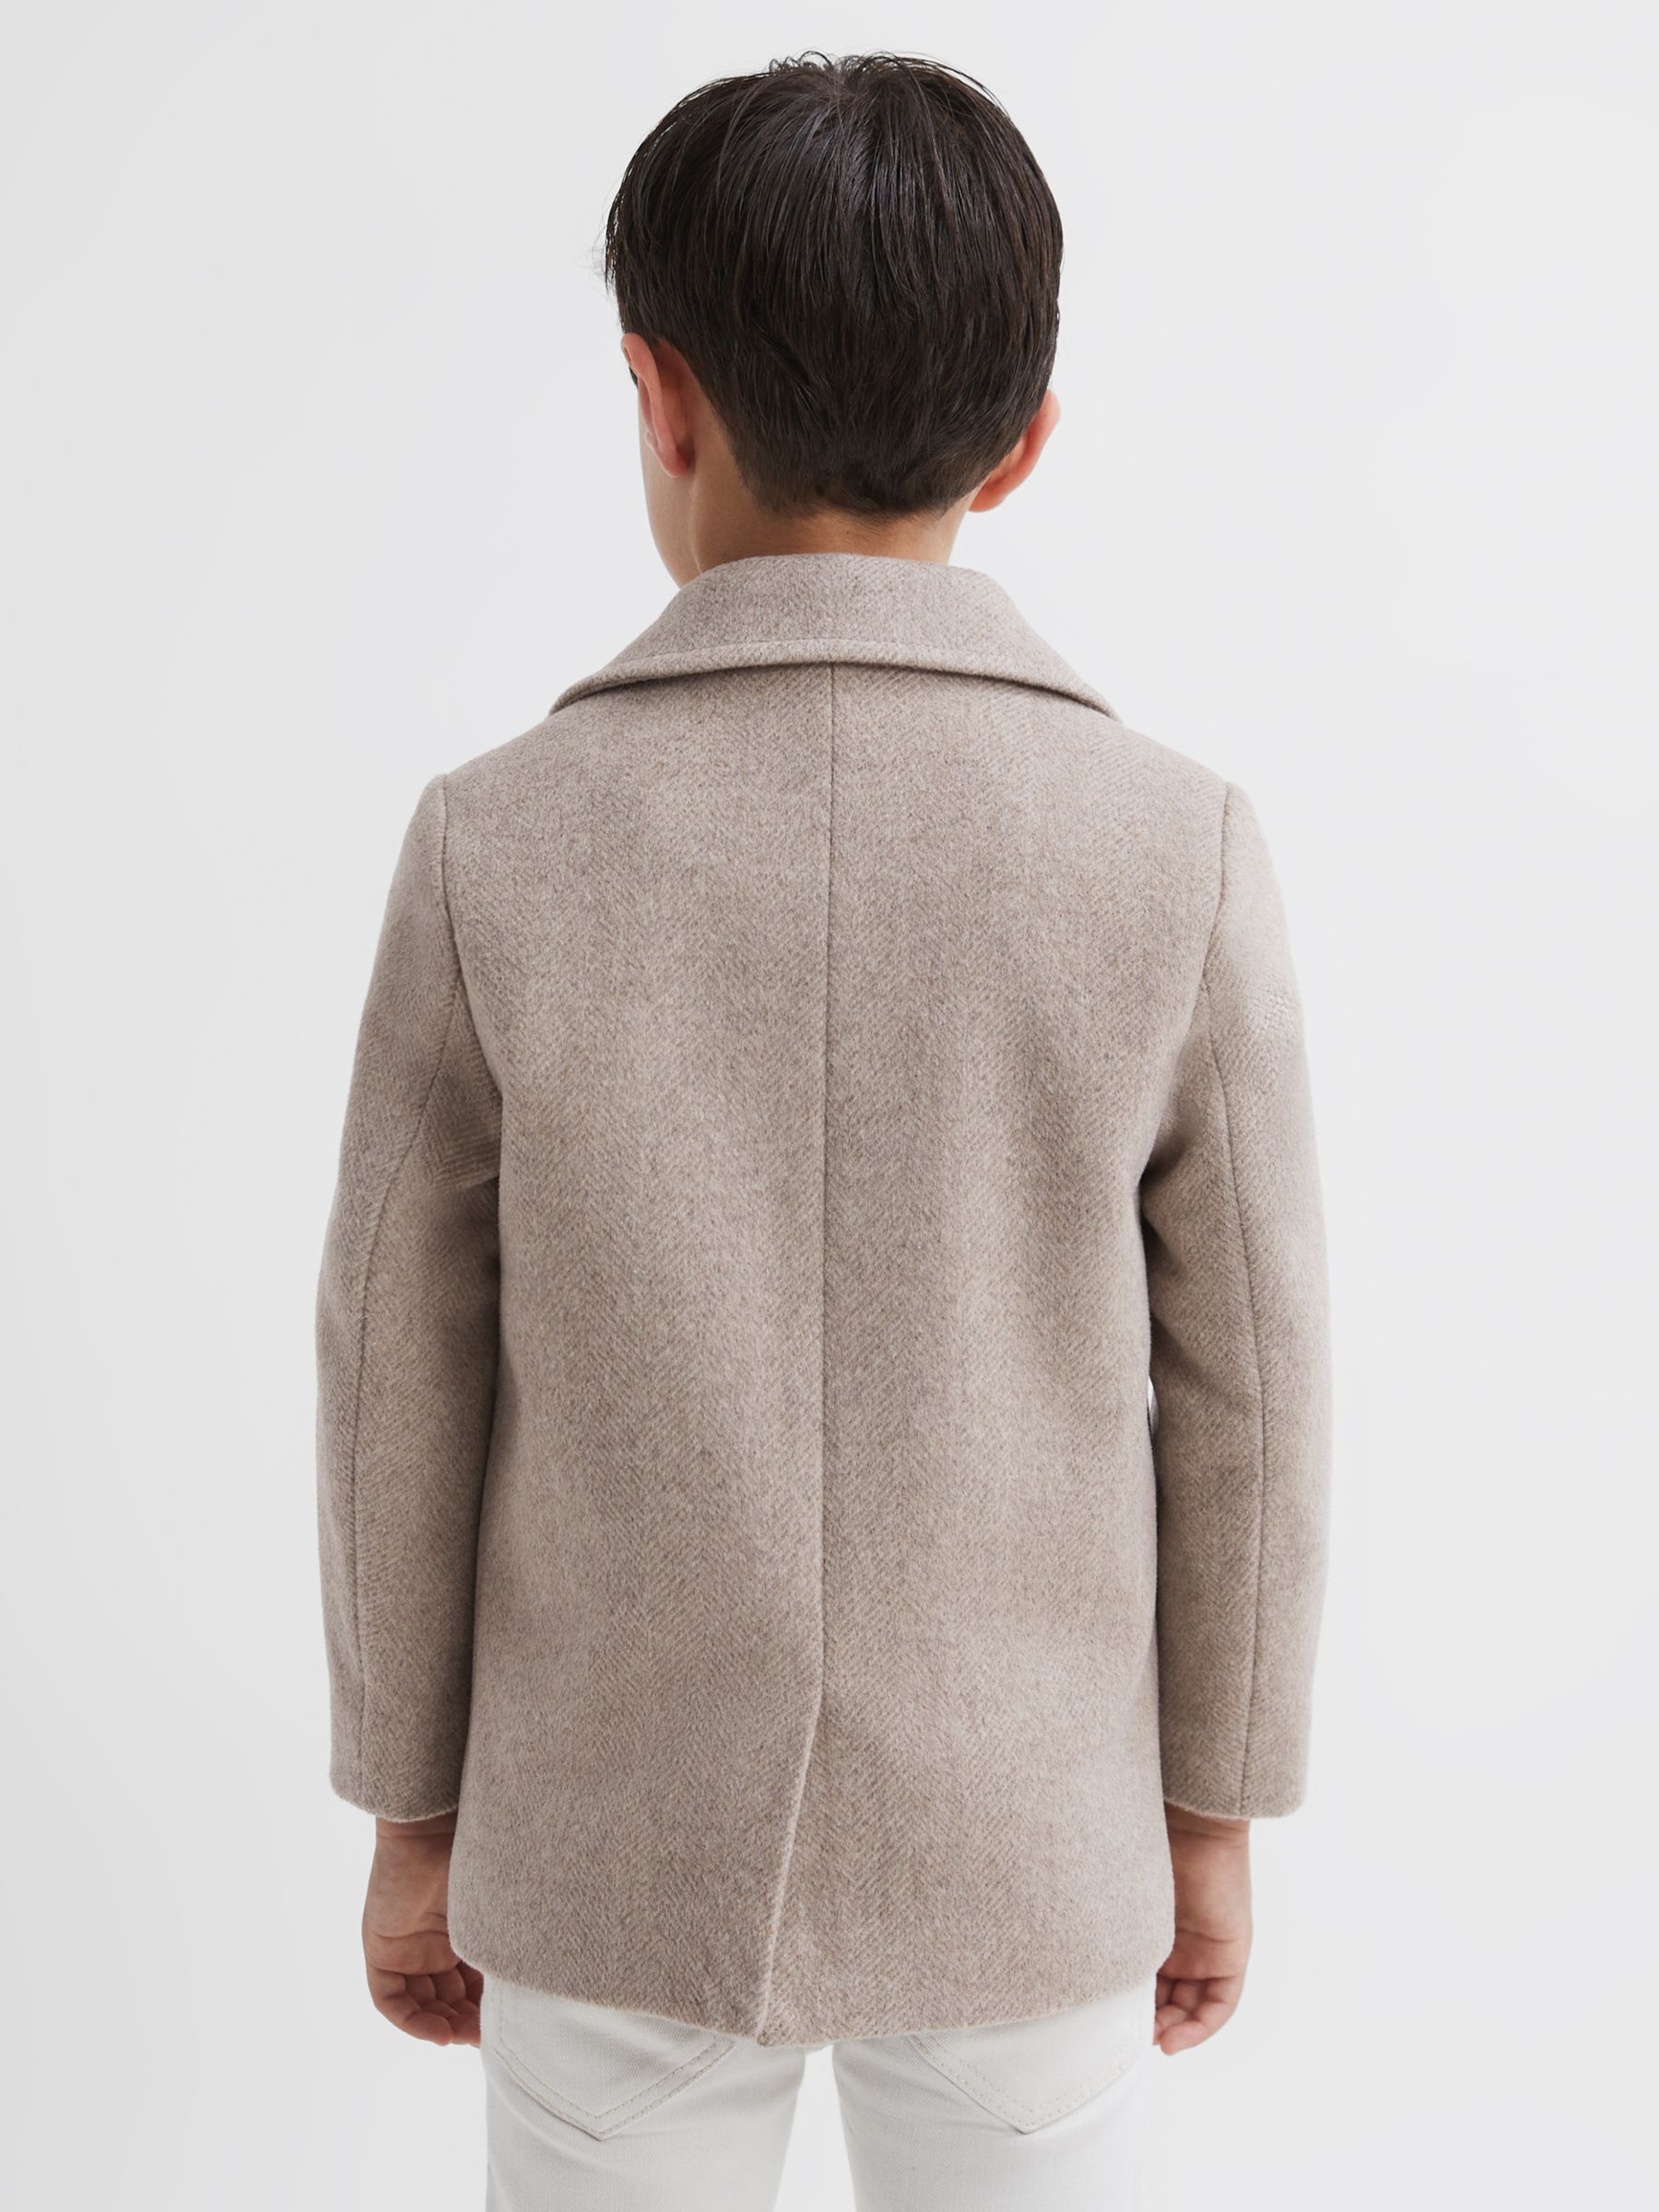 Buy Reiss Kids' Bergamo Double Breasted Wool Blend Pea Coat Online at johnlewis.com